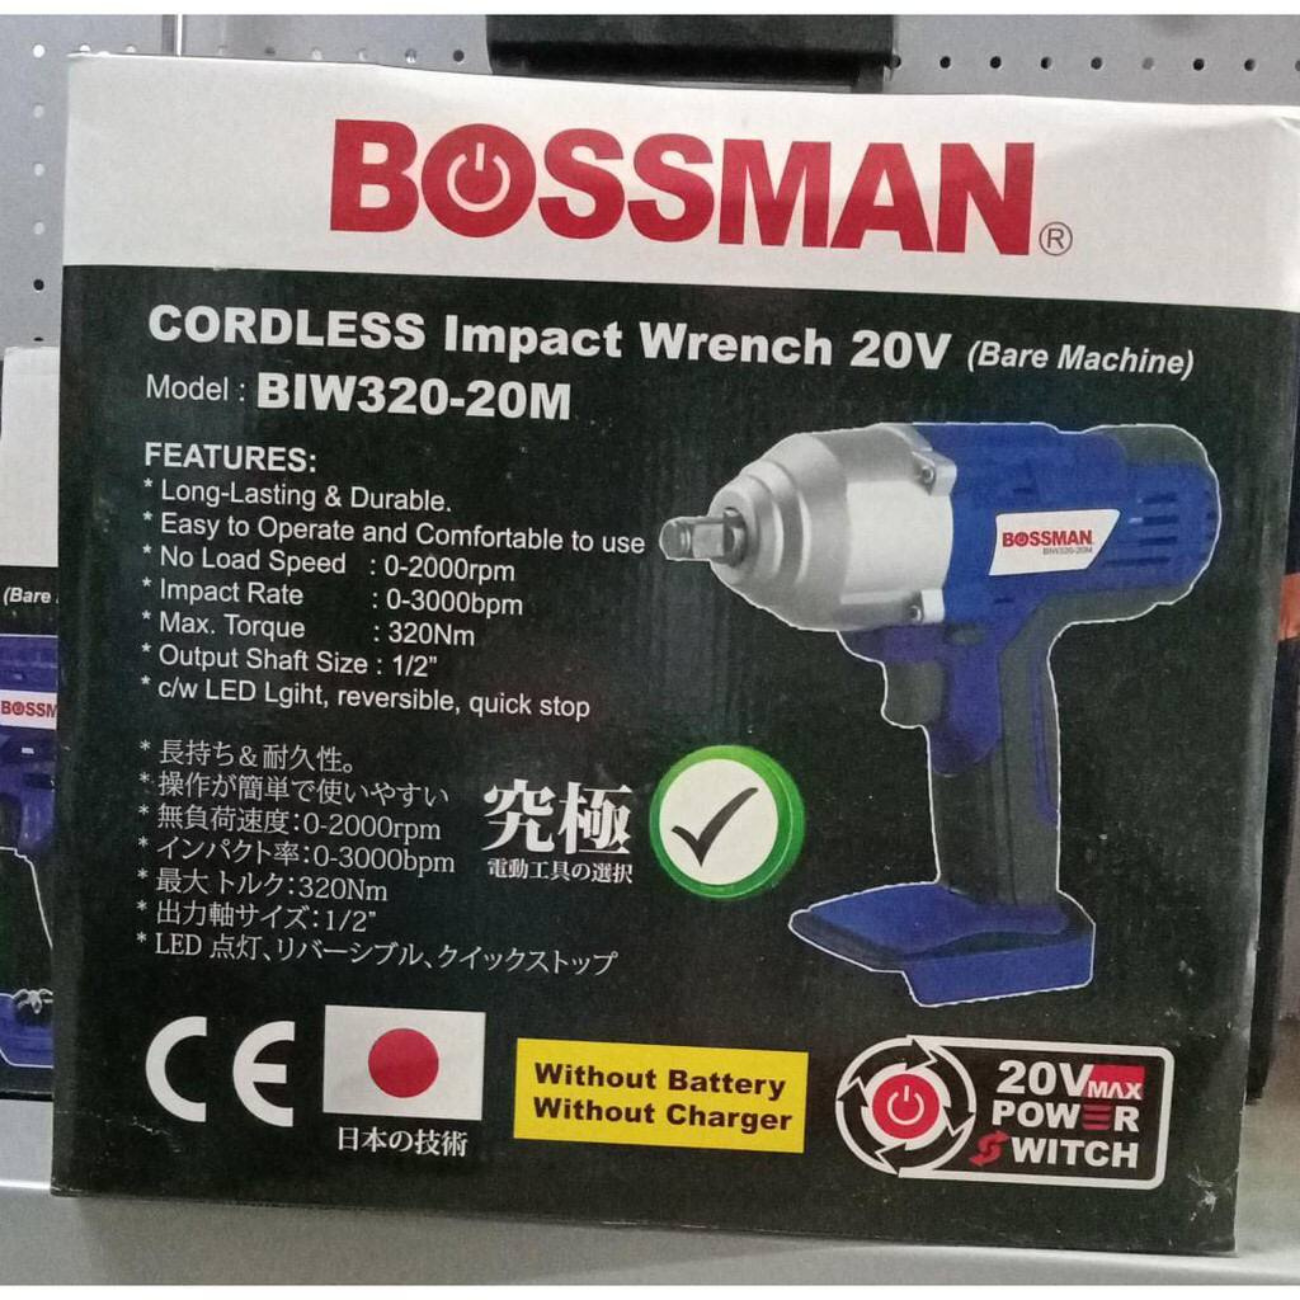 BOSSMAN BIW320-20M 20V CORDLESS IMPACT WRENCH